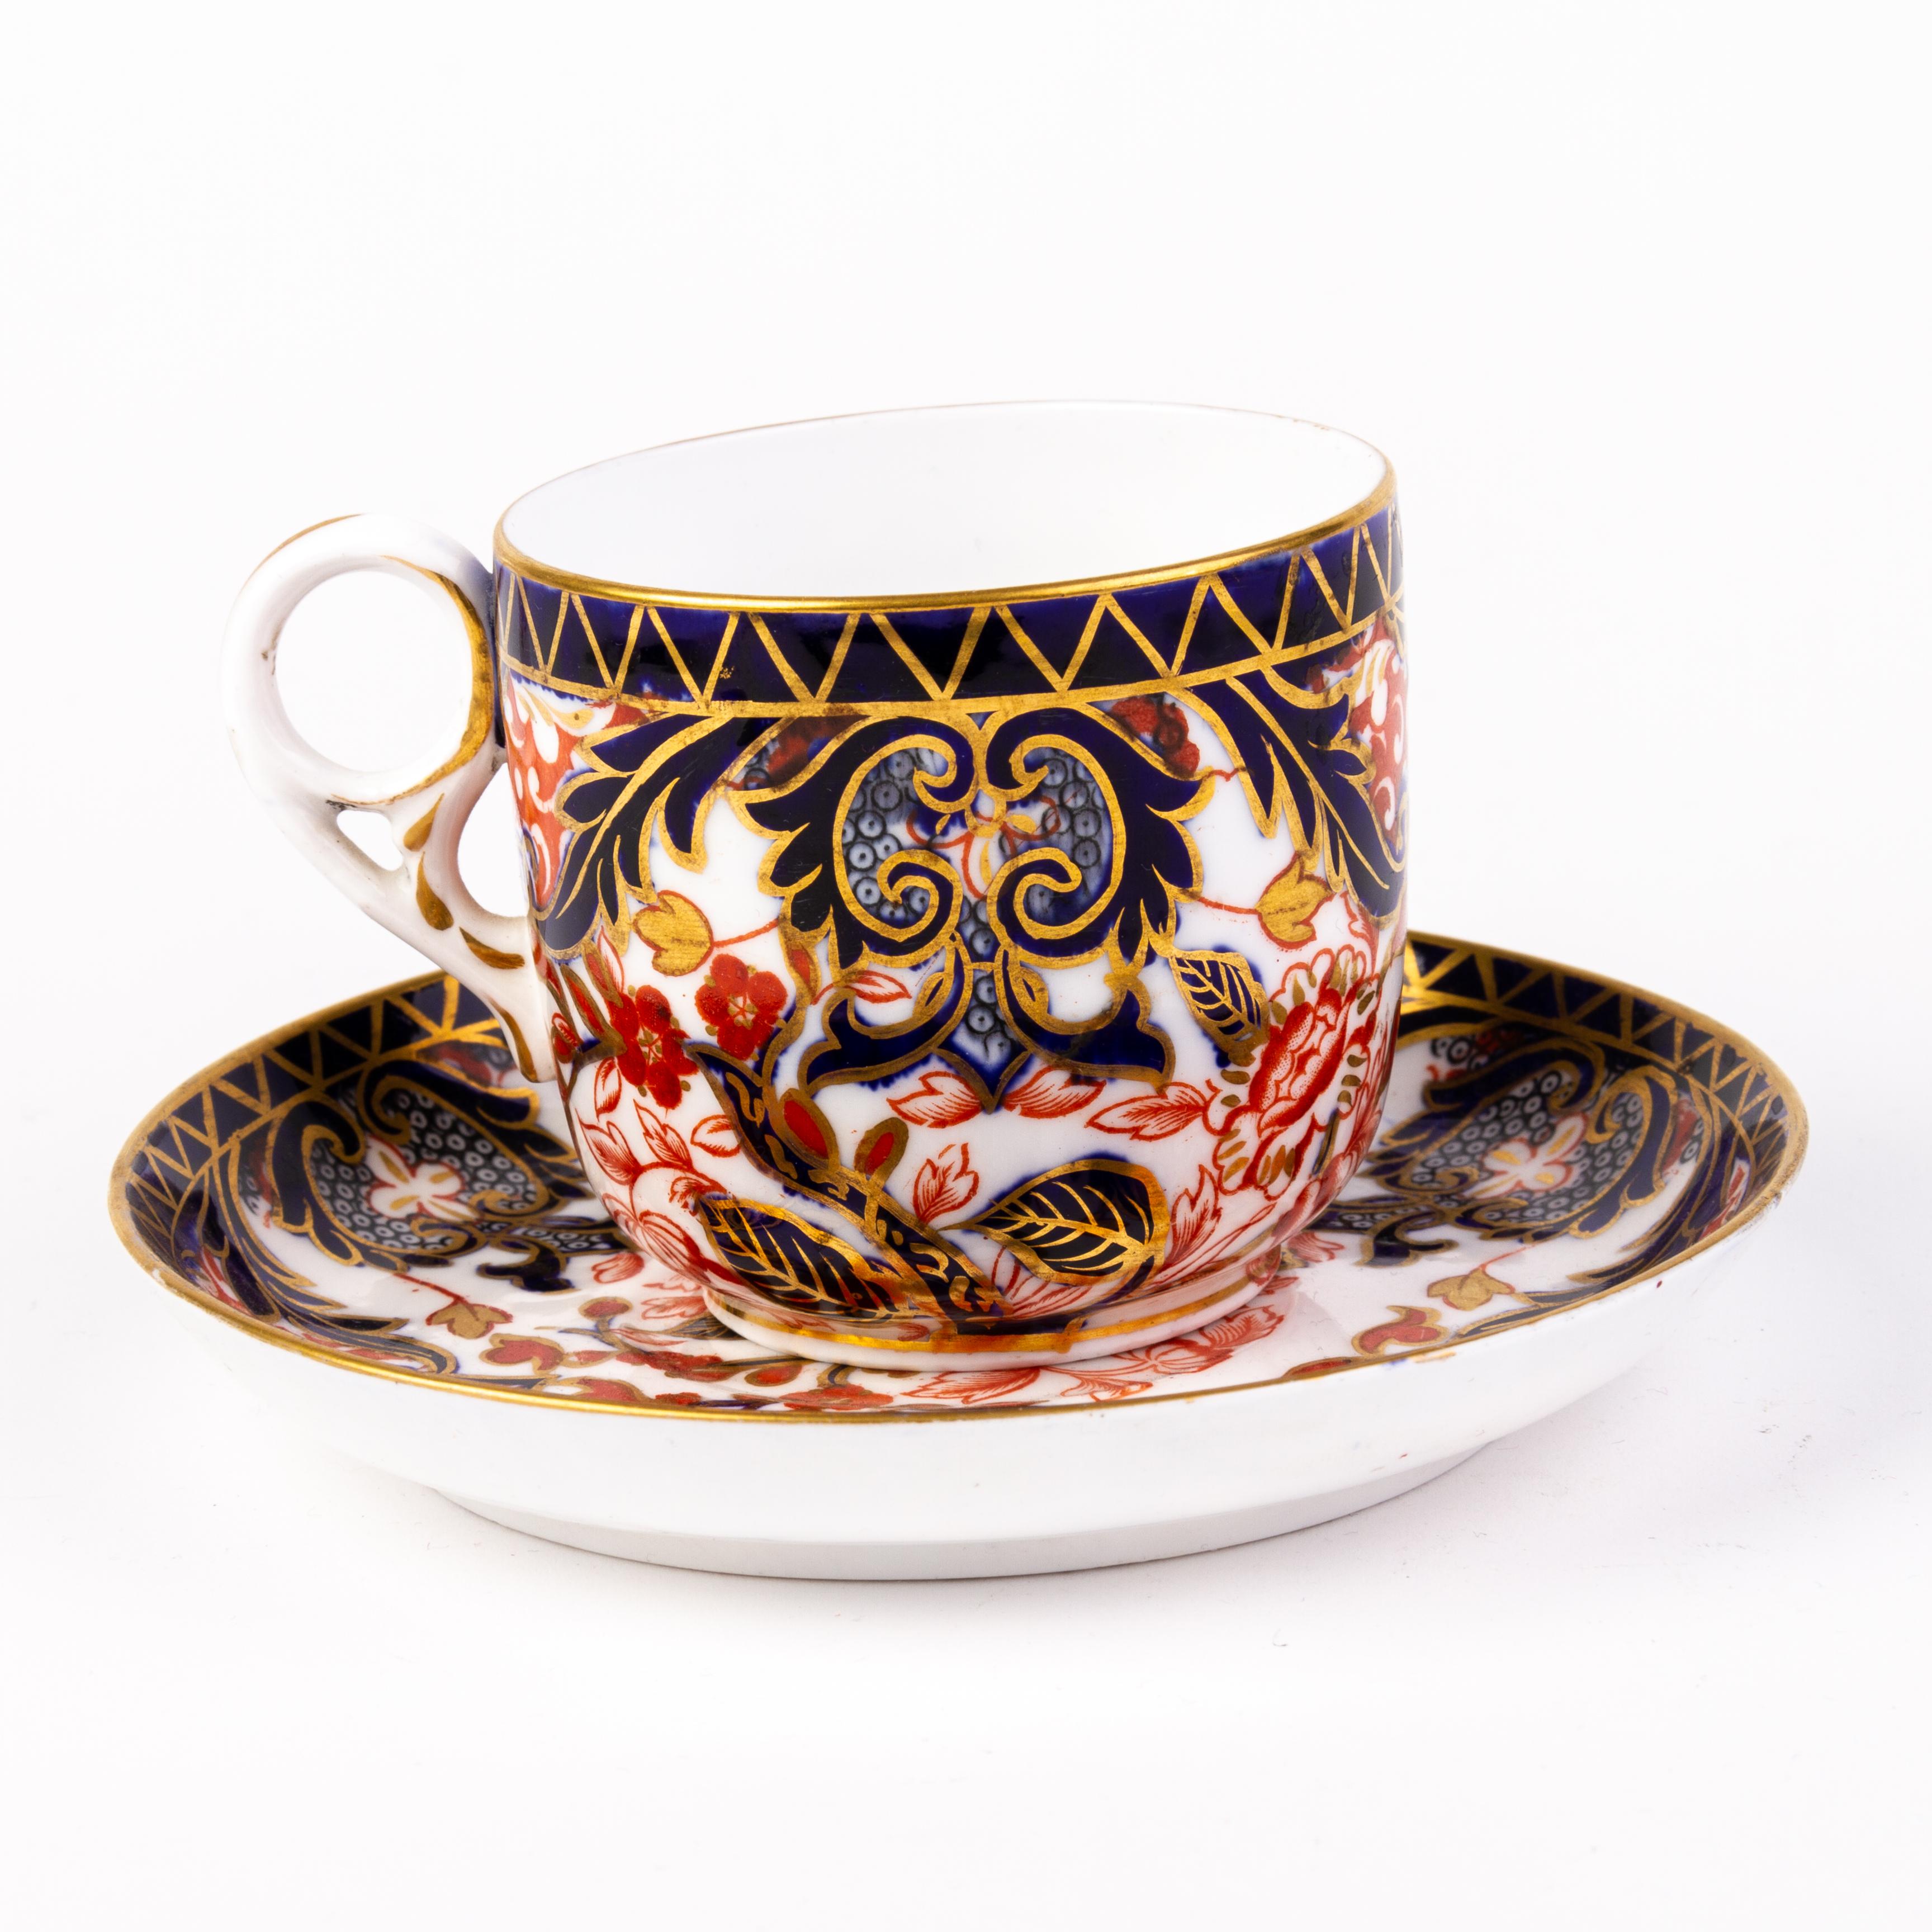 20th Century English Derby Imari Fine Porcelain Tea Cup & Saucer For Sale